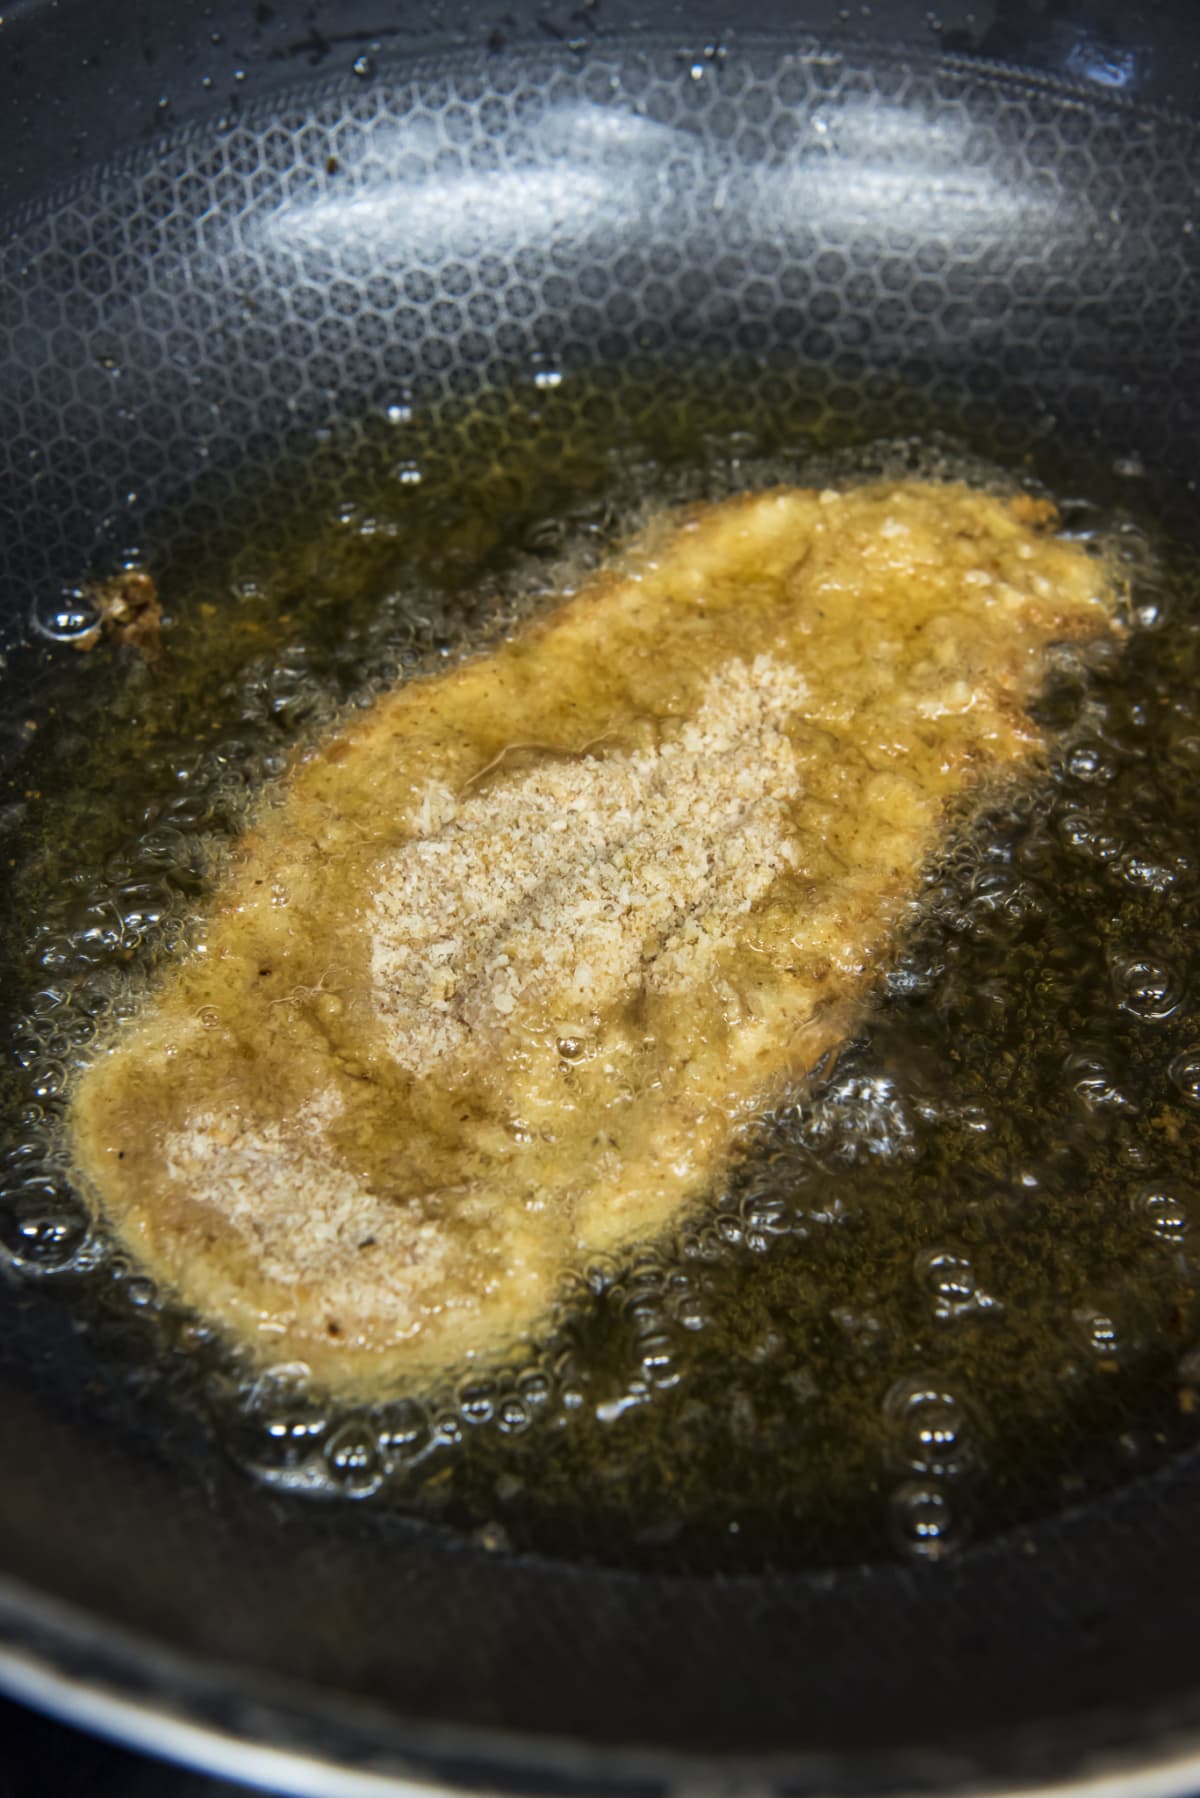 Breaded chicken breast frying in oil in a cast iron skillet.